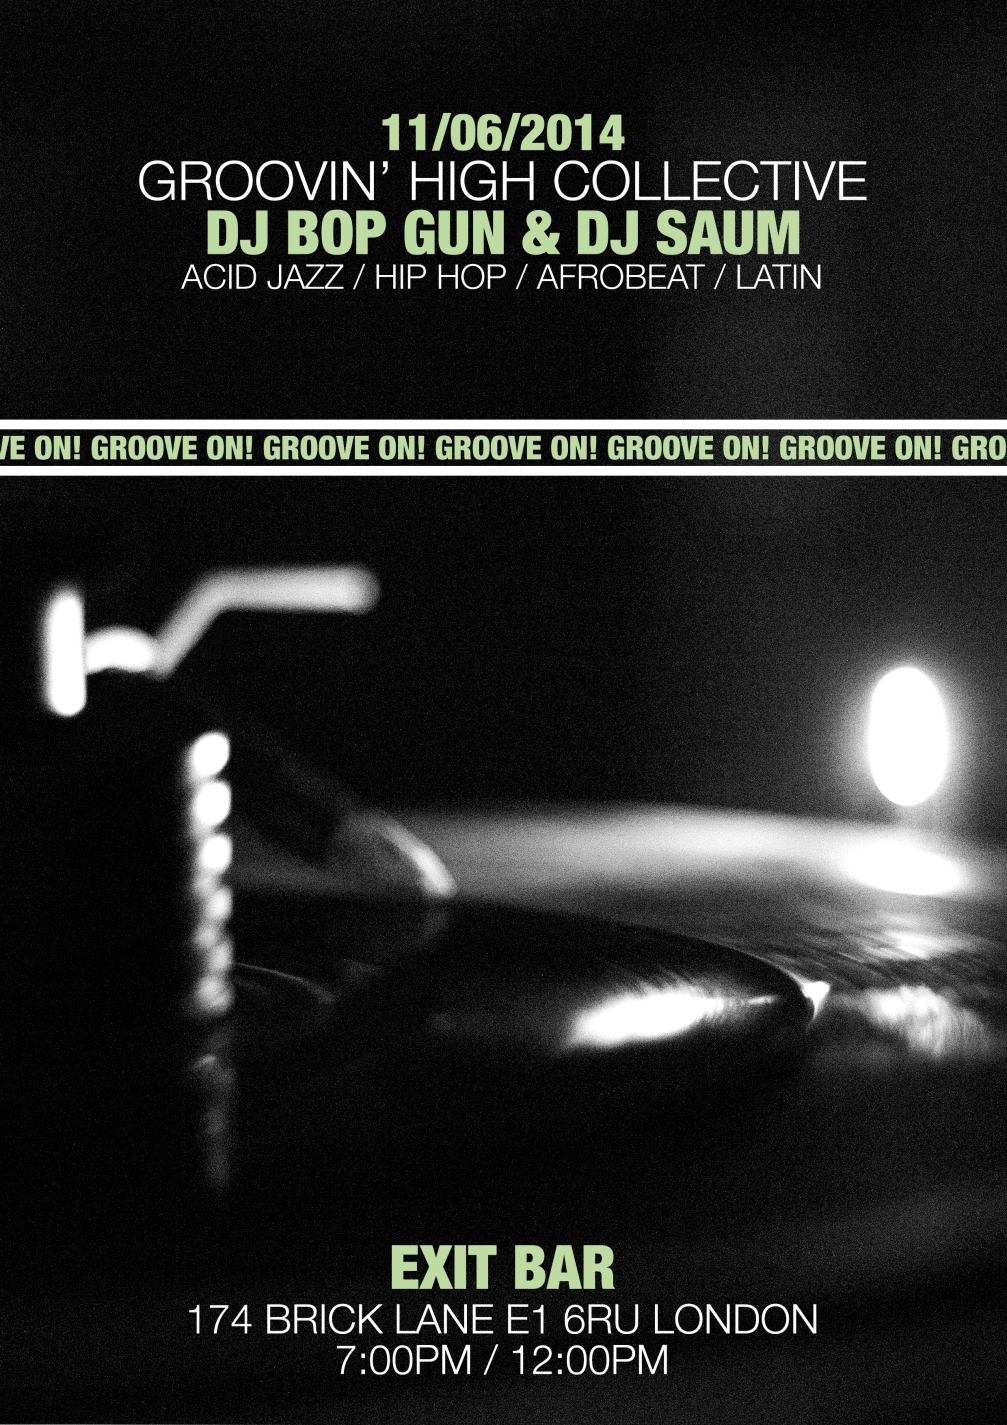 11/06/2014 Groovin' High Collective @ Exit Bar - Dj Bop Gun & Dj Saum + Special guest: Auddicted 